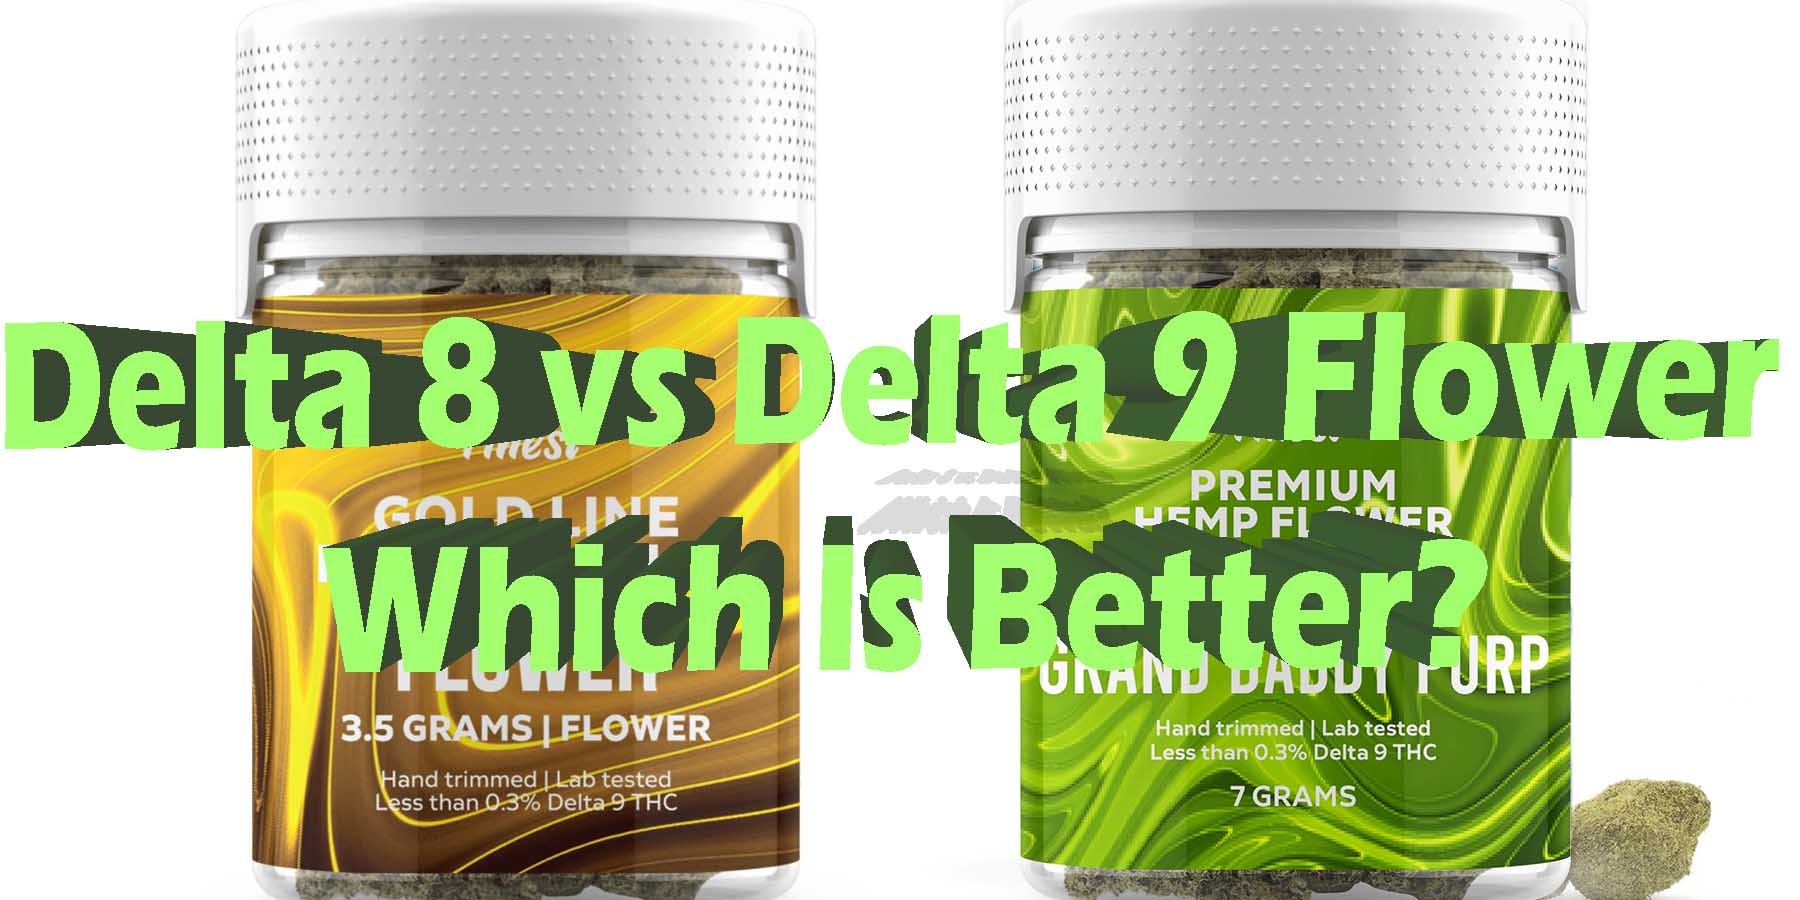 Delta 8 Flower vs Delta 9 Flower Which Is Better HowToGetNearMe BestPlace LowestPrice Coupon Discount For Smoking Best Brand D9 D8 THCA Indoor Good High Binod Bloomz